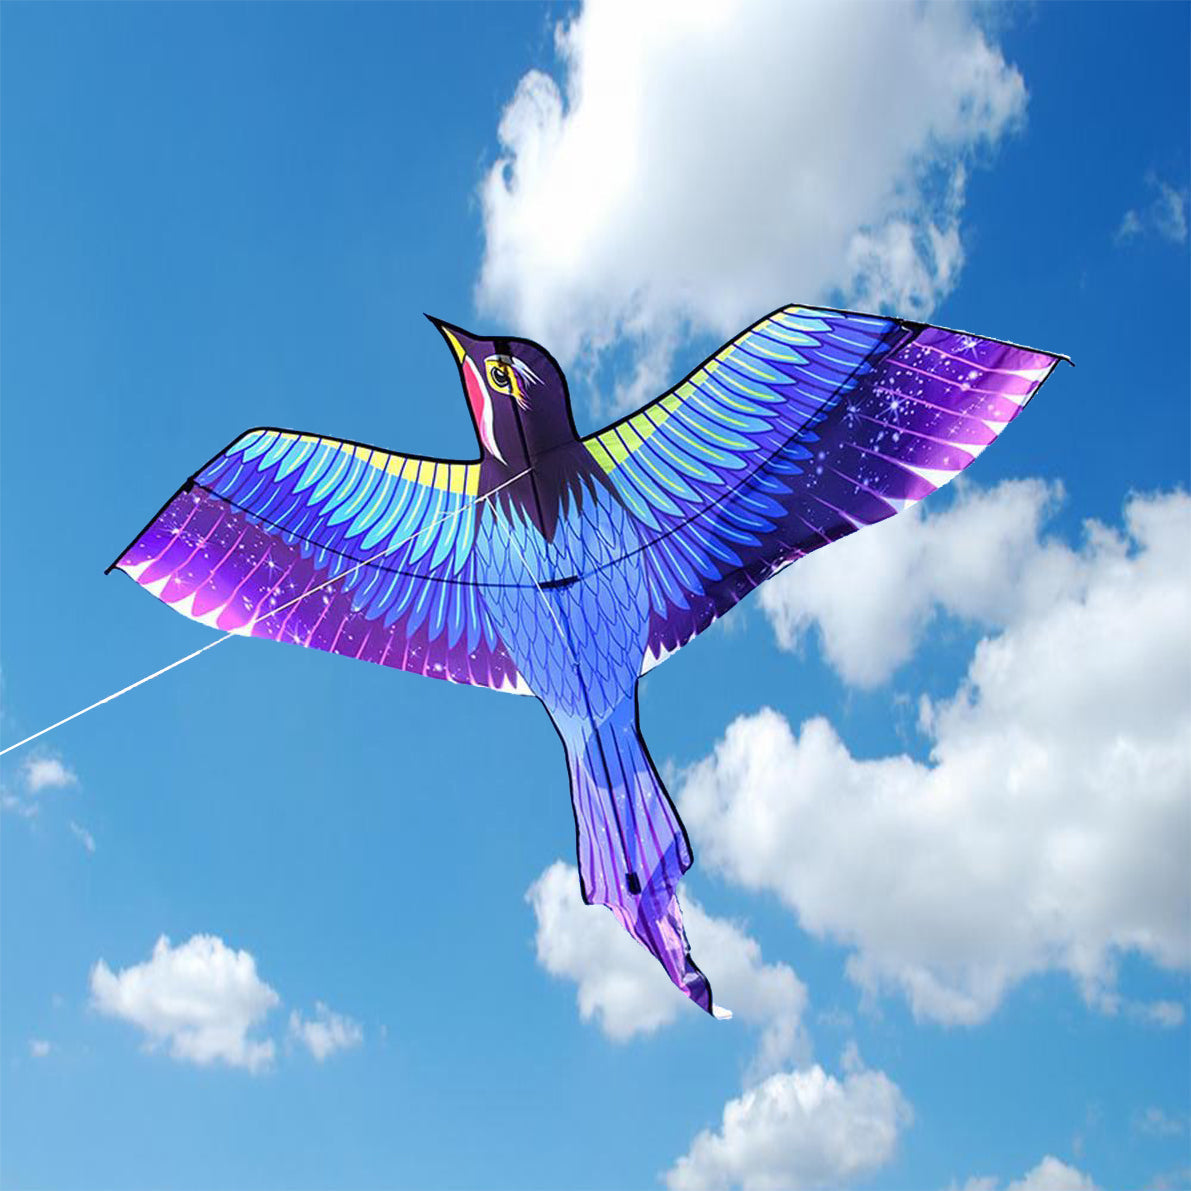 Magpie Kite